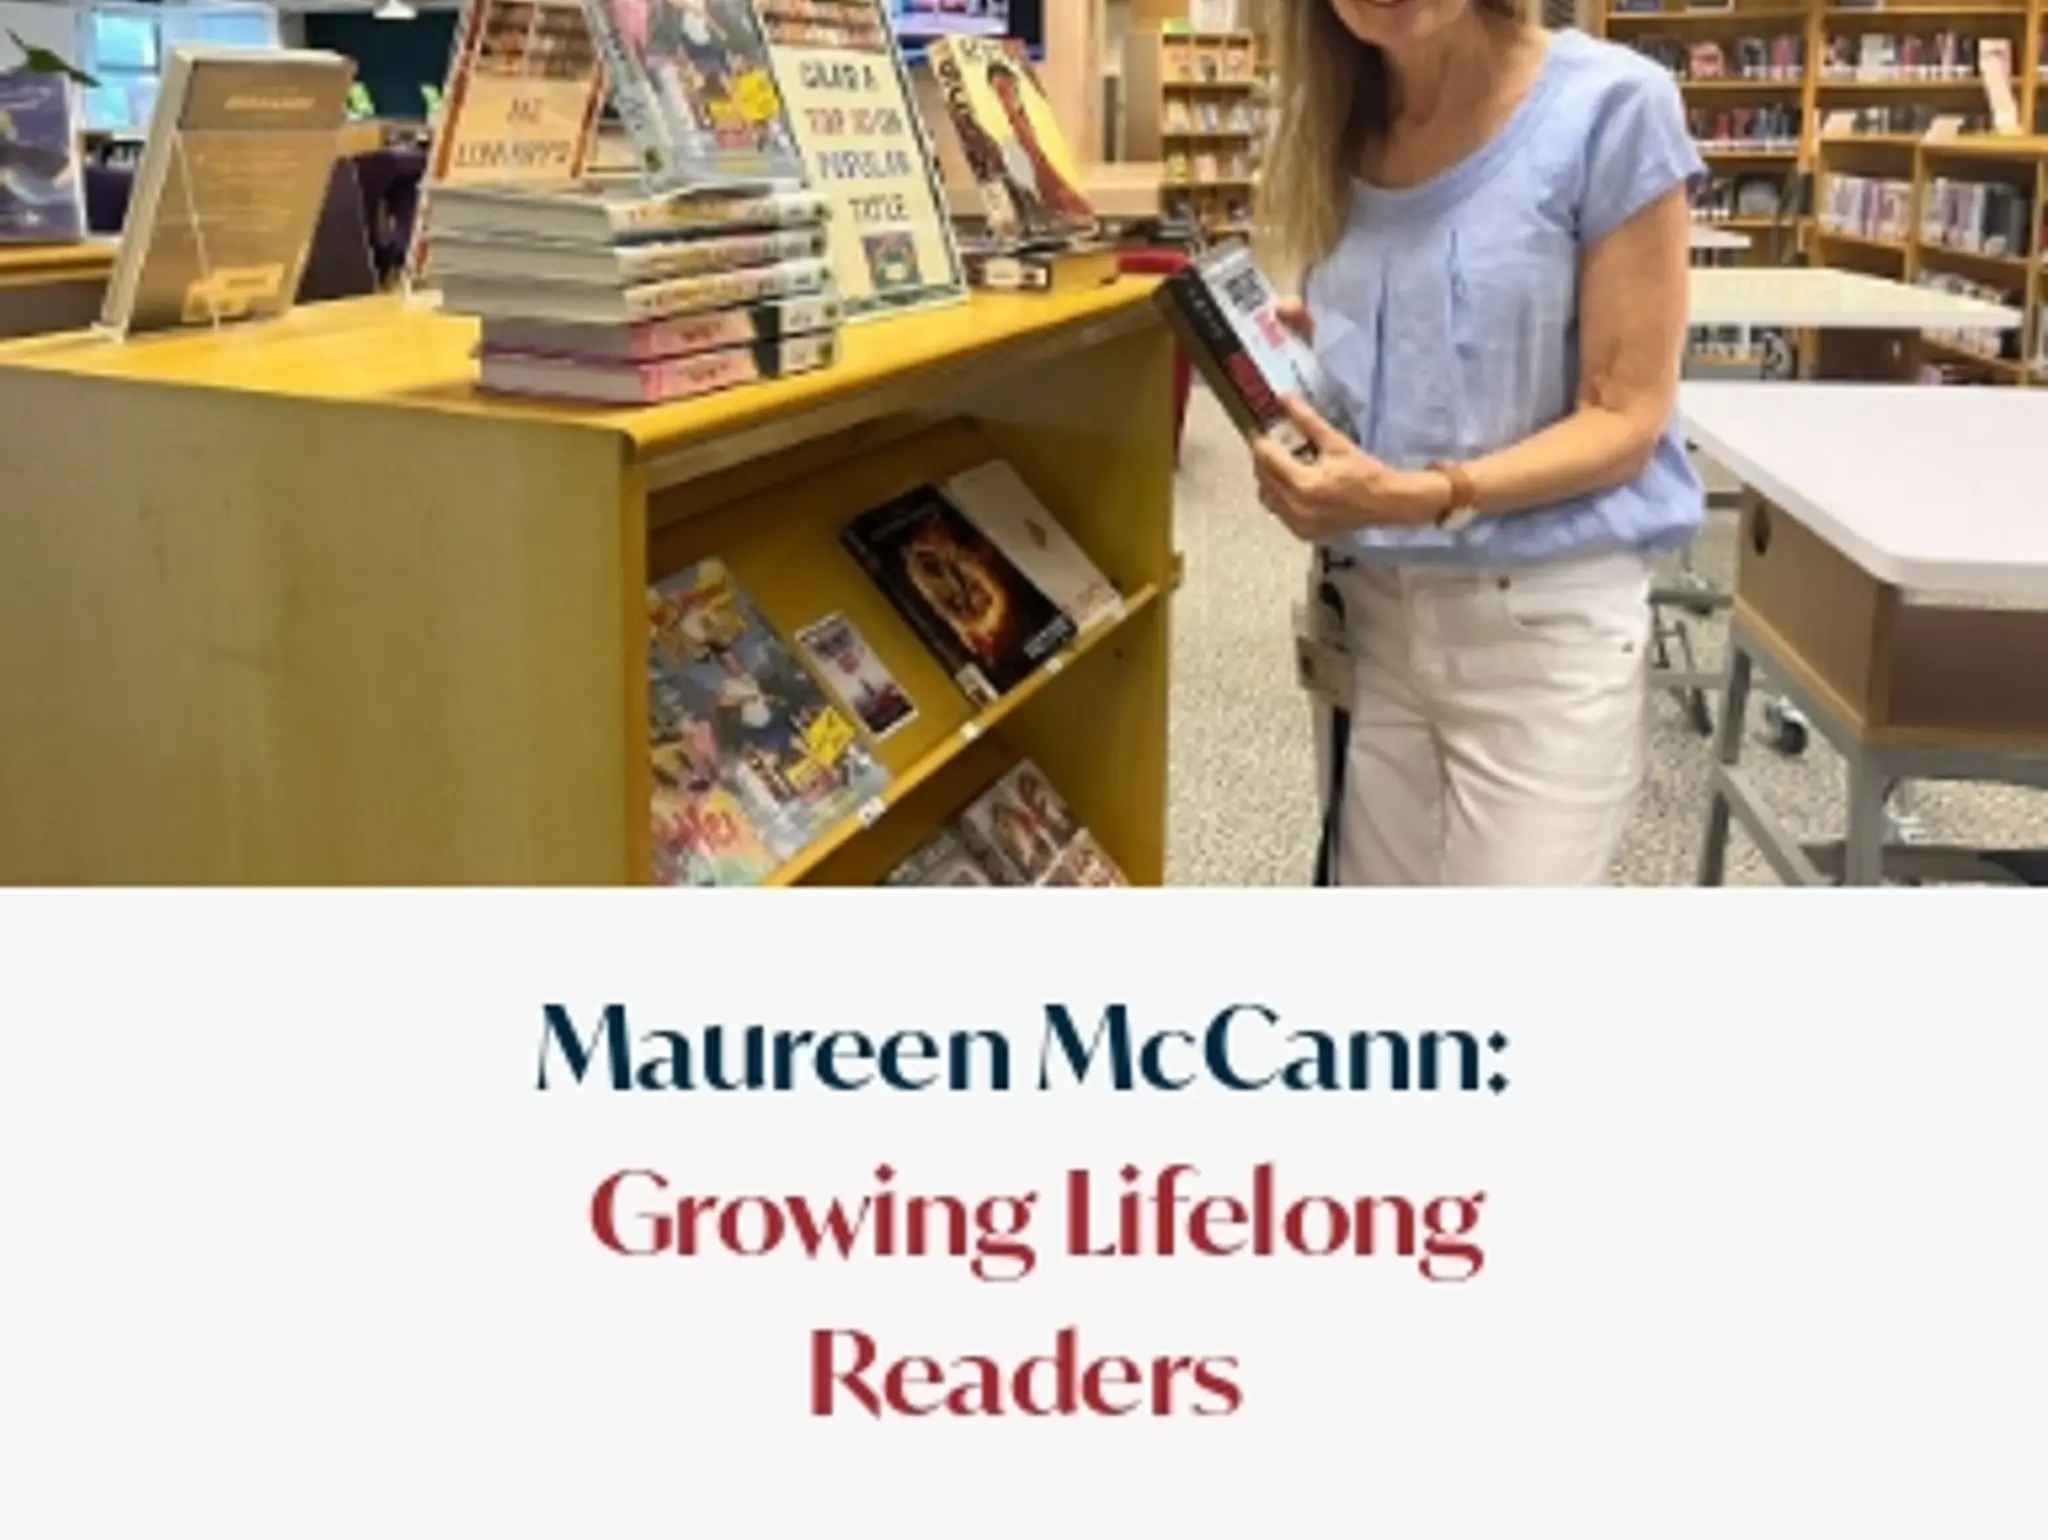 Maureen McCann: Growing Lifelong Readers